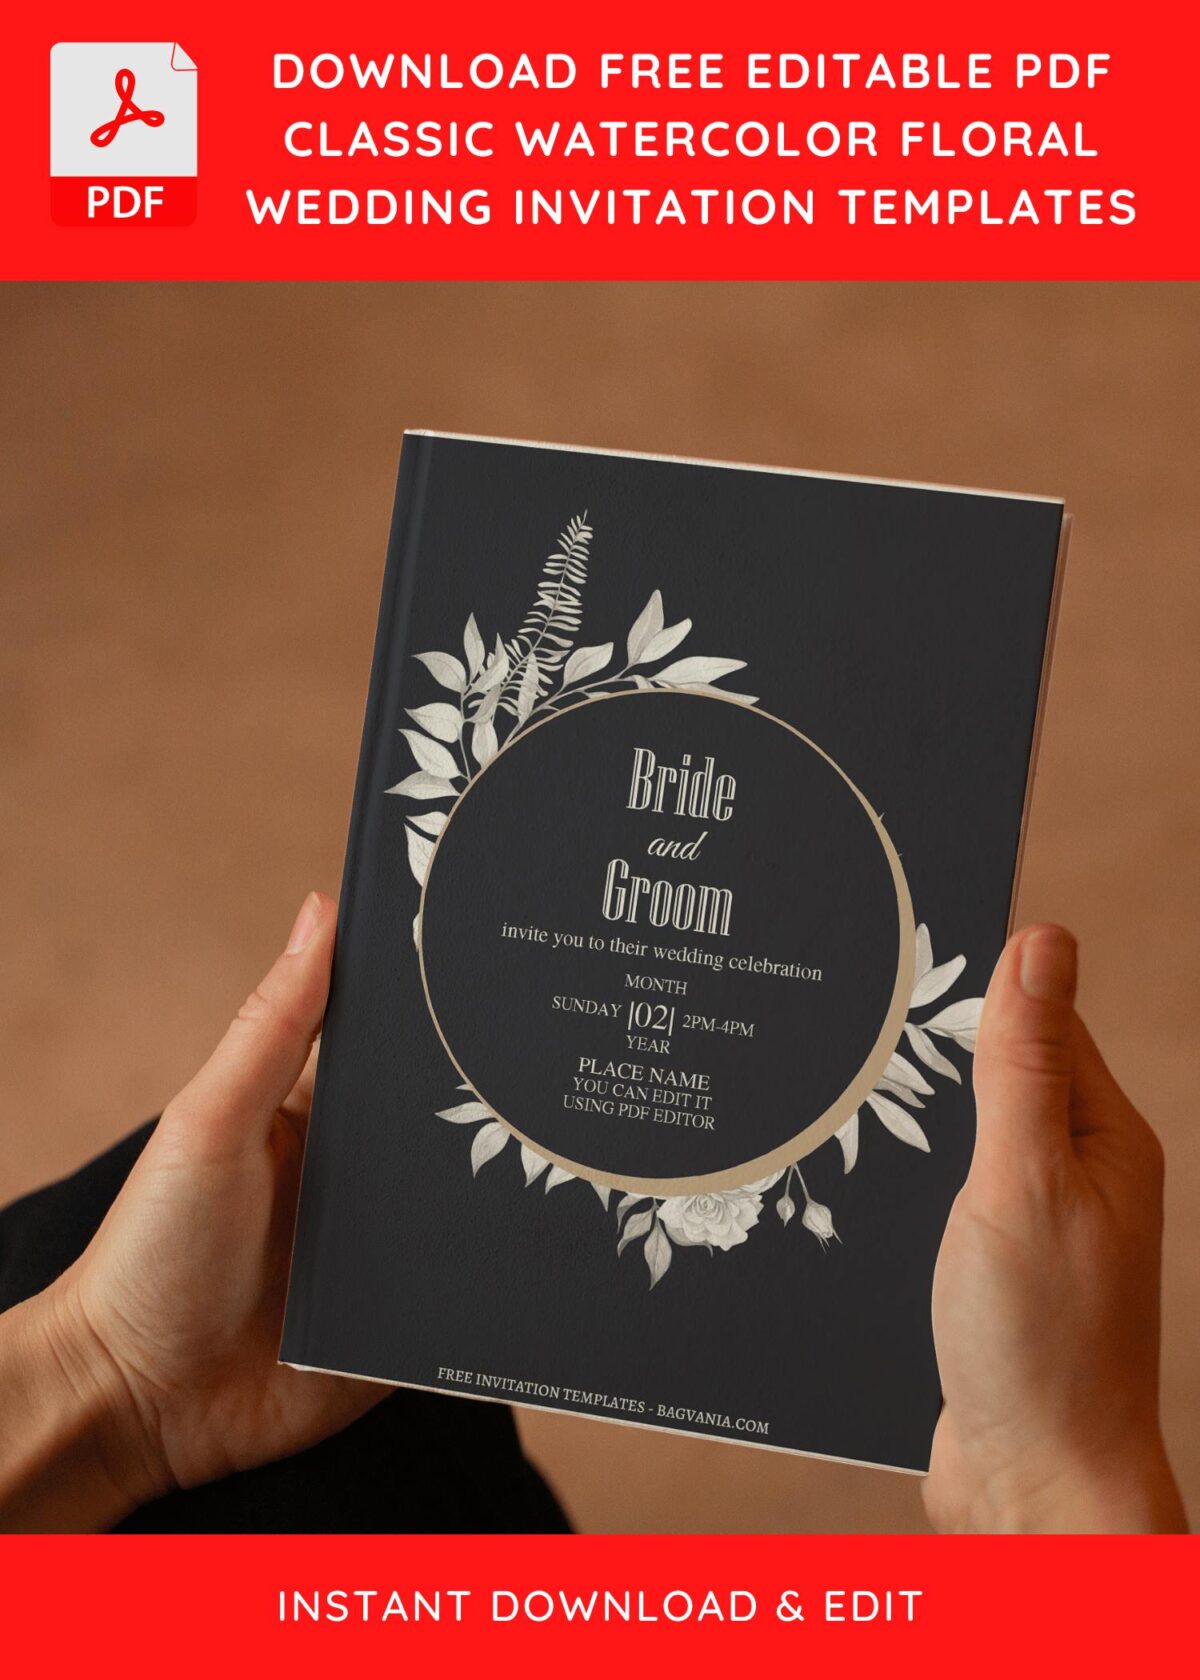 (Free Editable PDF) Ethereal Garden Romance Wedding Invitation Templates I